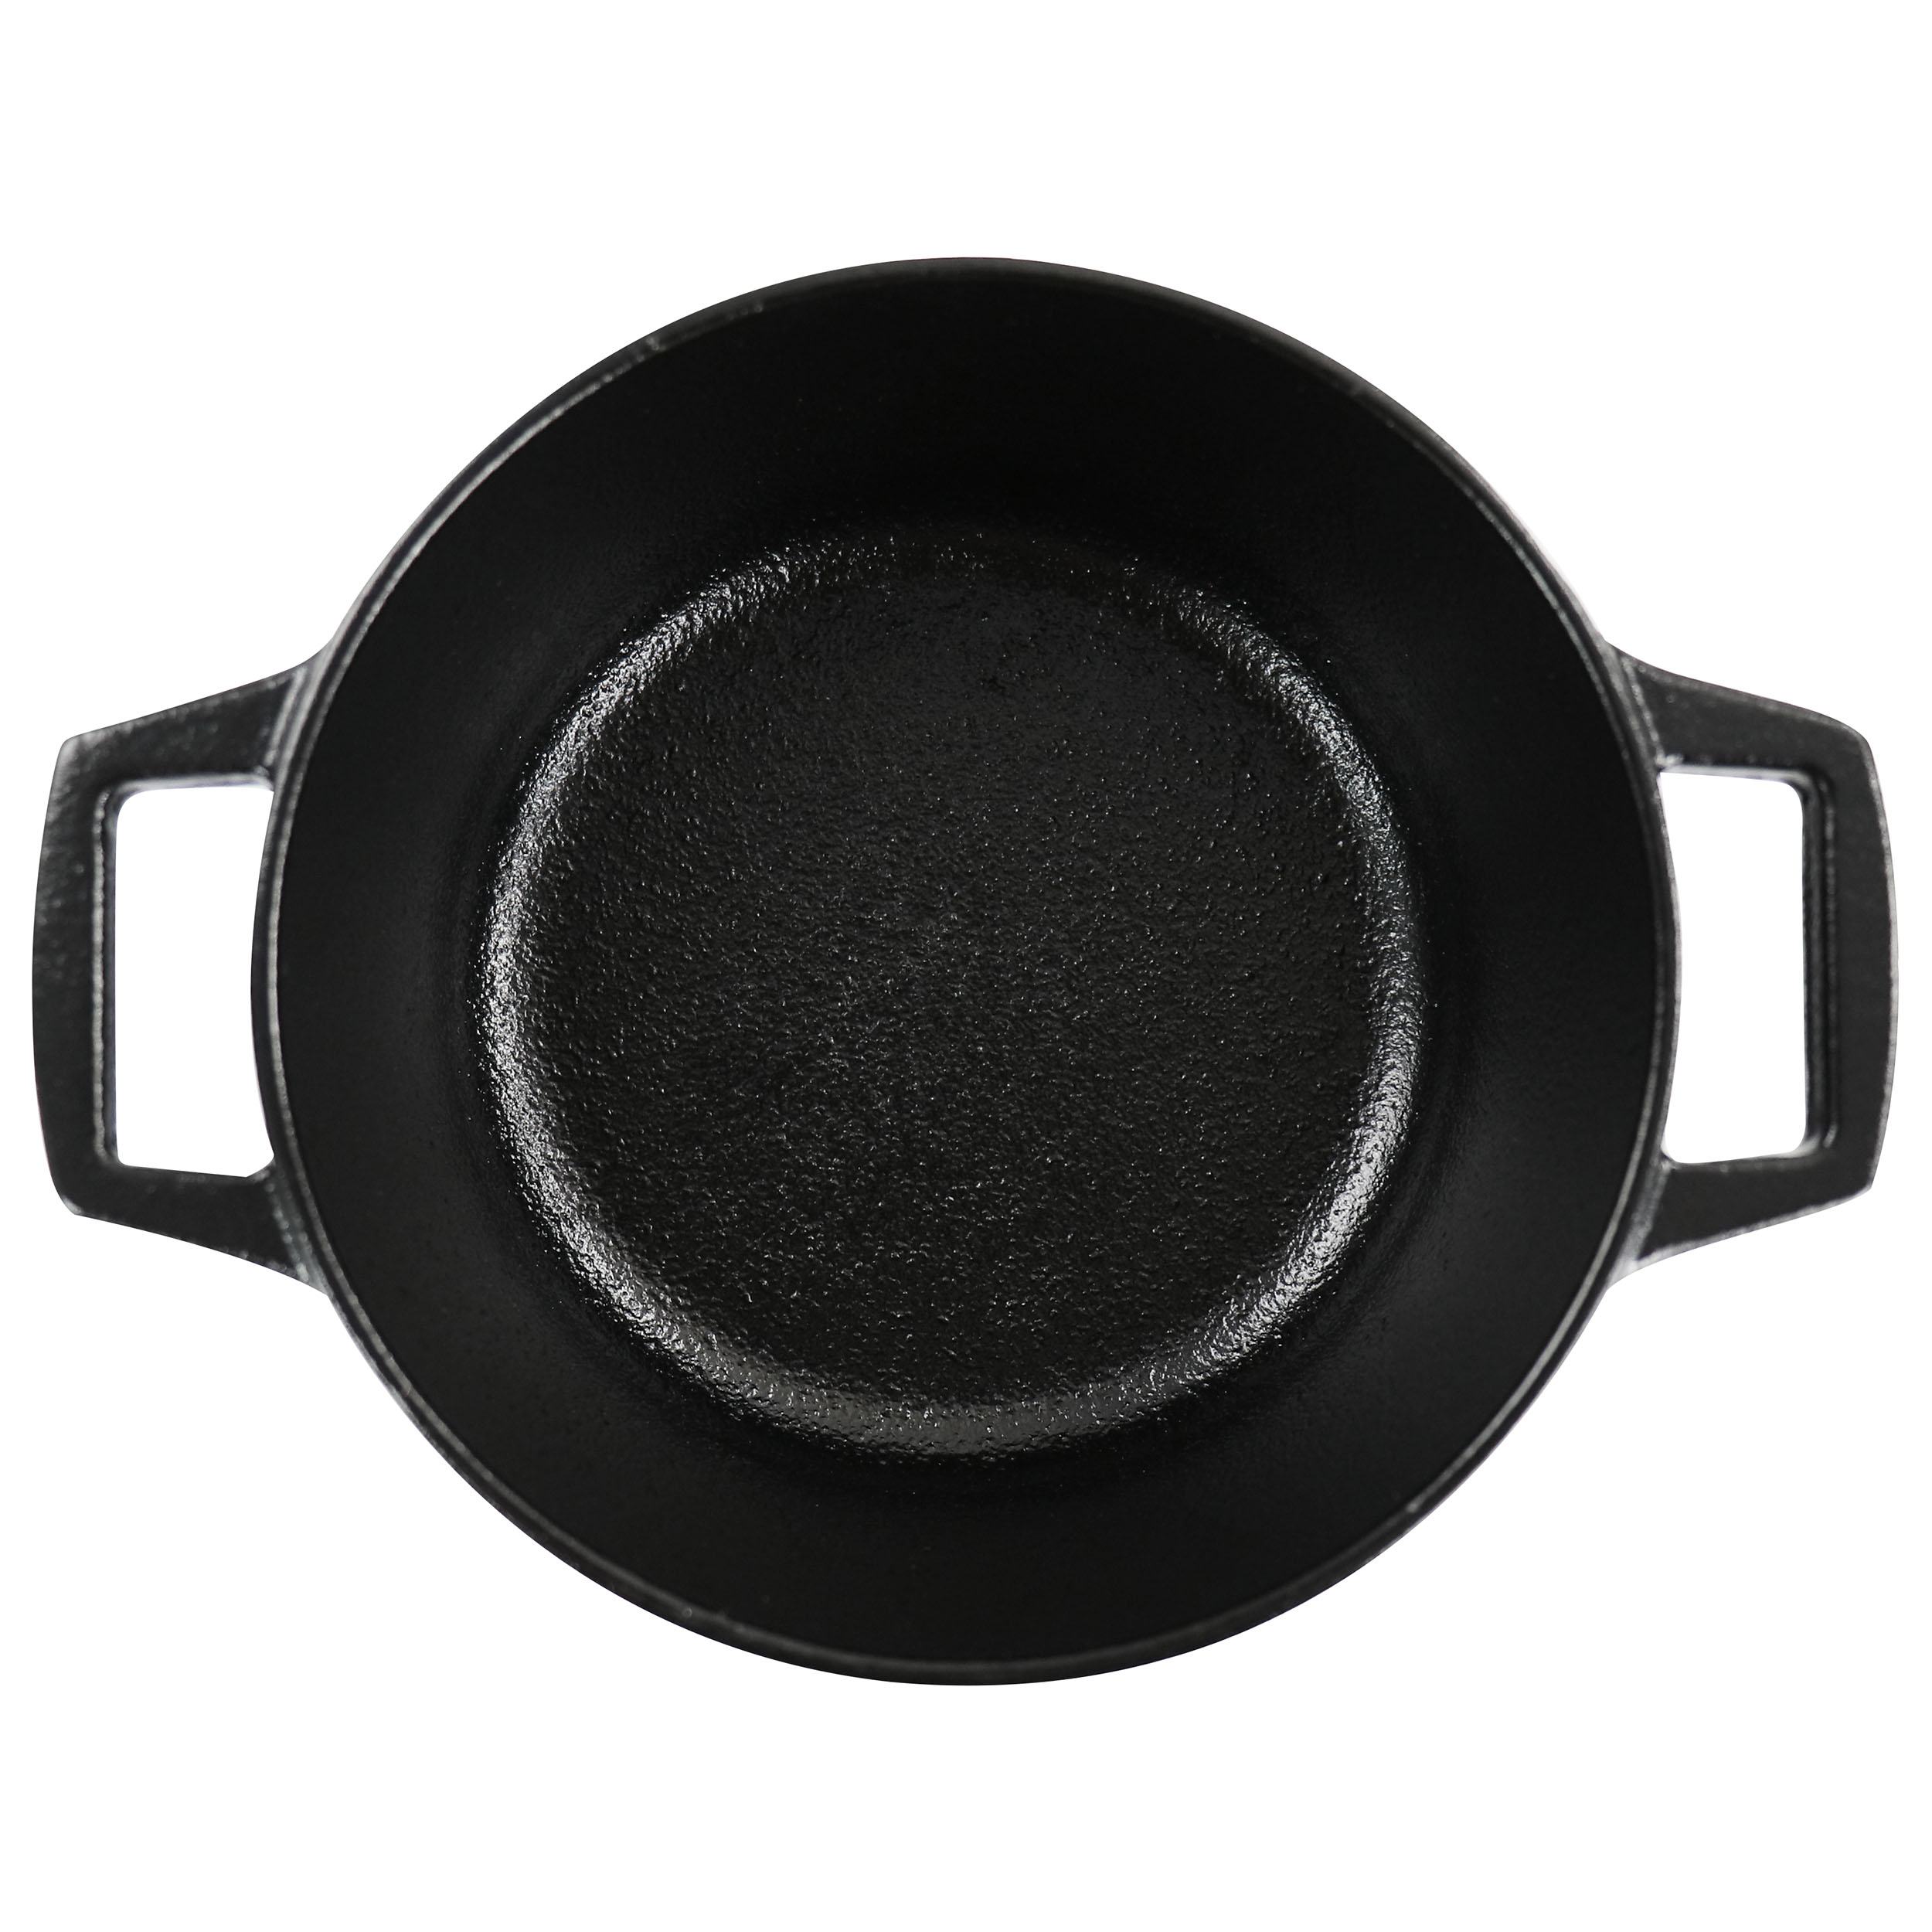 20cm Black Cast Iron Pot with Cover